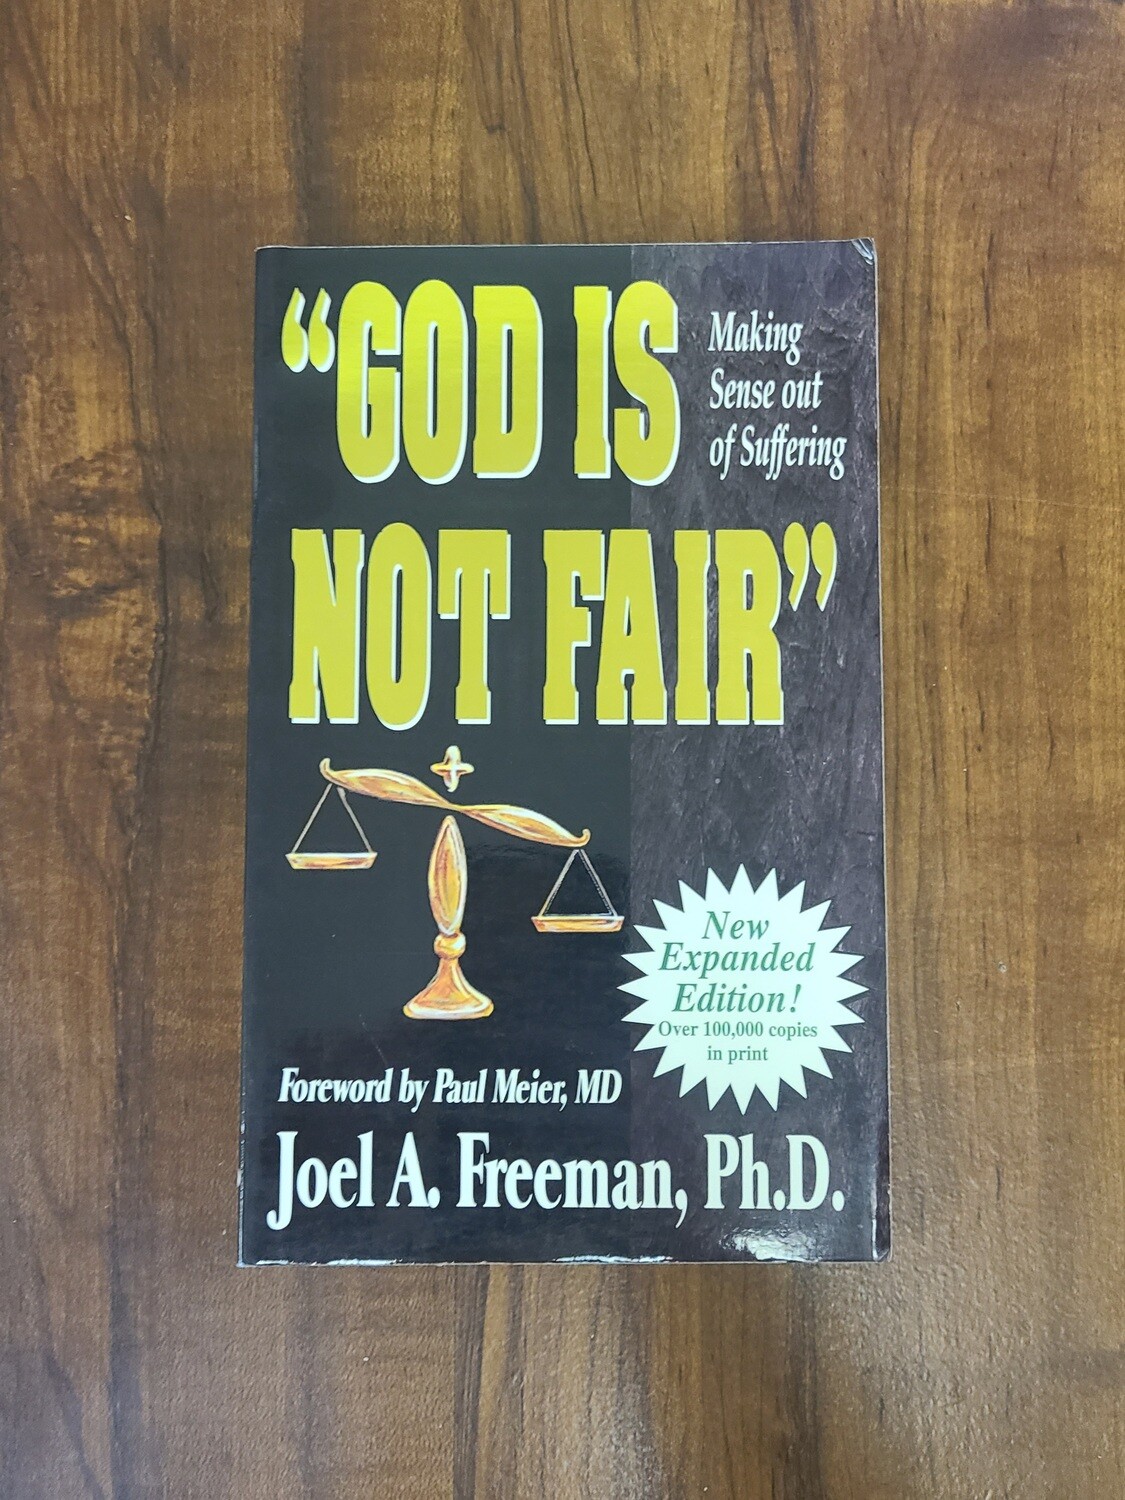 "God is Not Fair" by Joel A. Freeman, Ph.D.